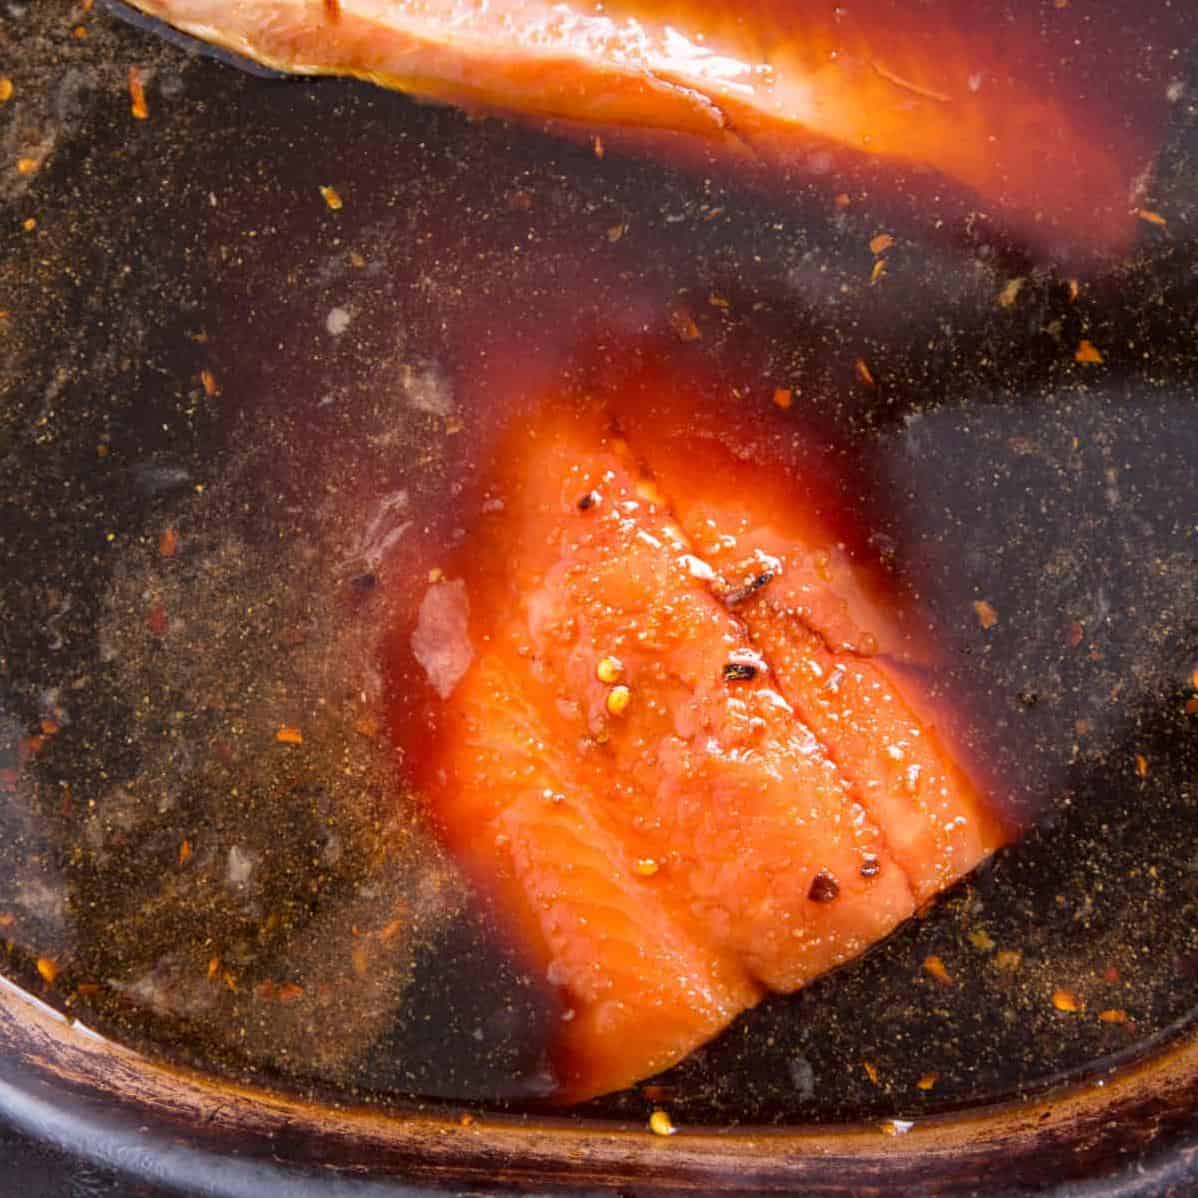 Smoky and Succulent: A Delicious Salmon Brine Recipe